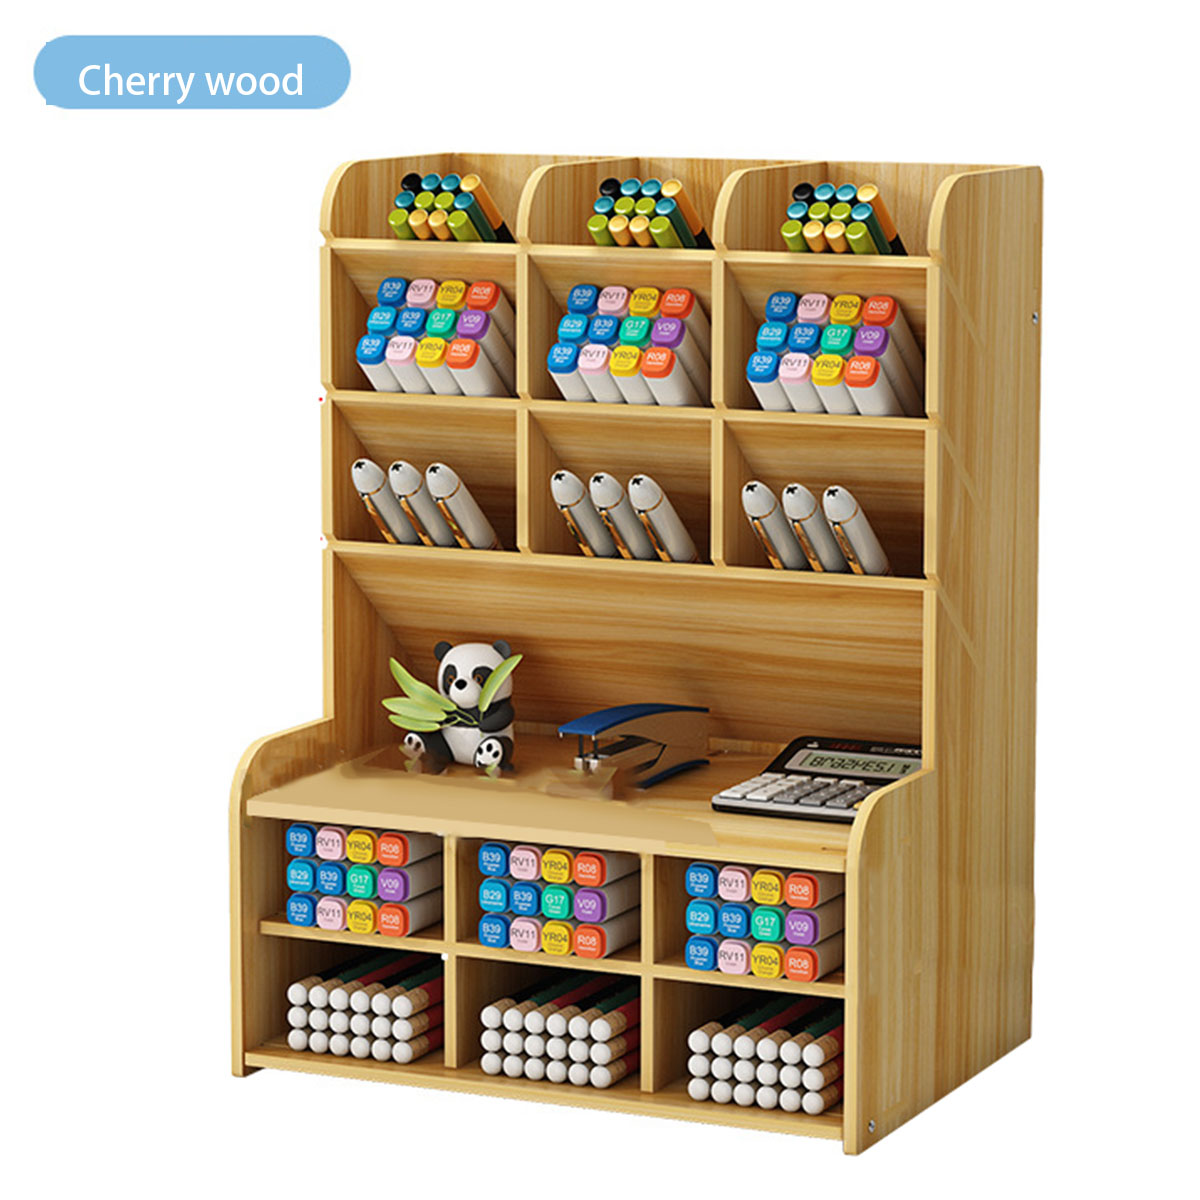 Wooden-Pencil-Pen-Storage-Box-Tilting-Desktop-Stationary-Holder-Organizer-Home-Office-Supplies-Stora-1745793-14